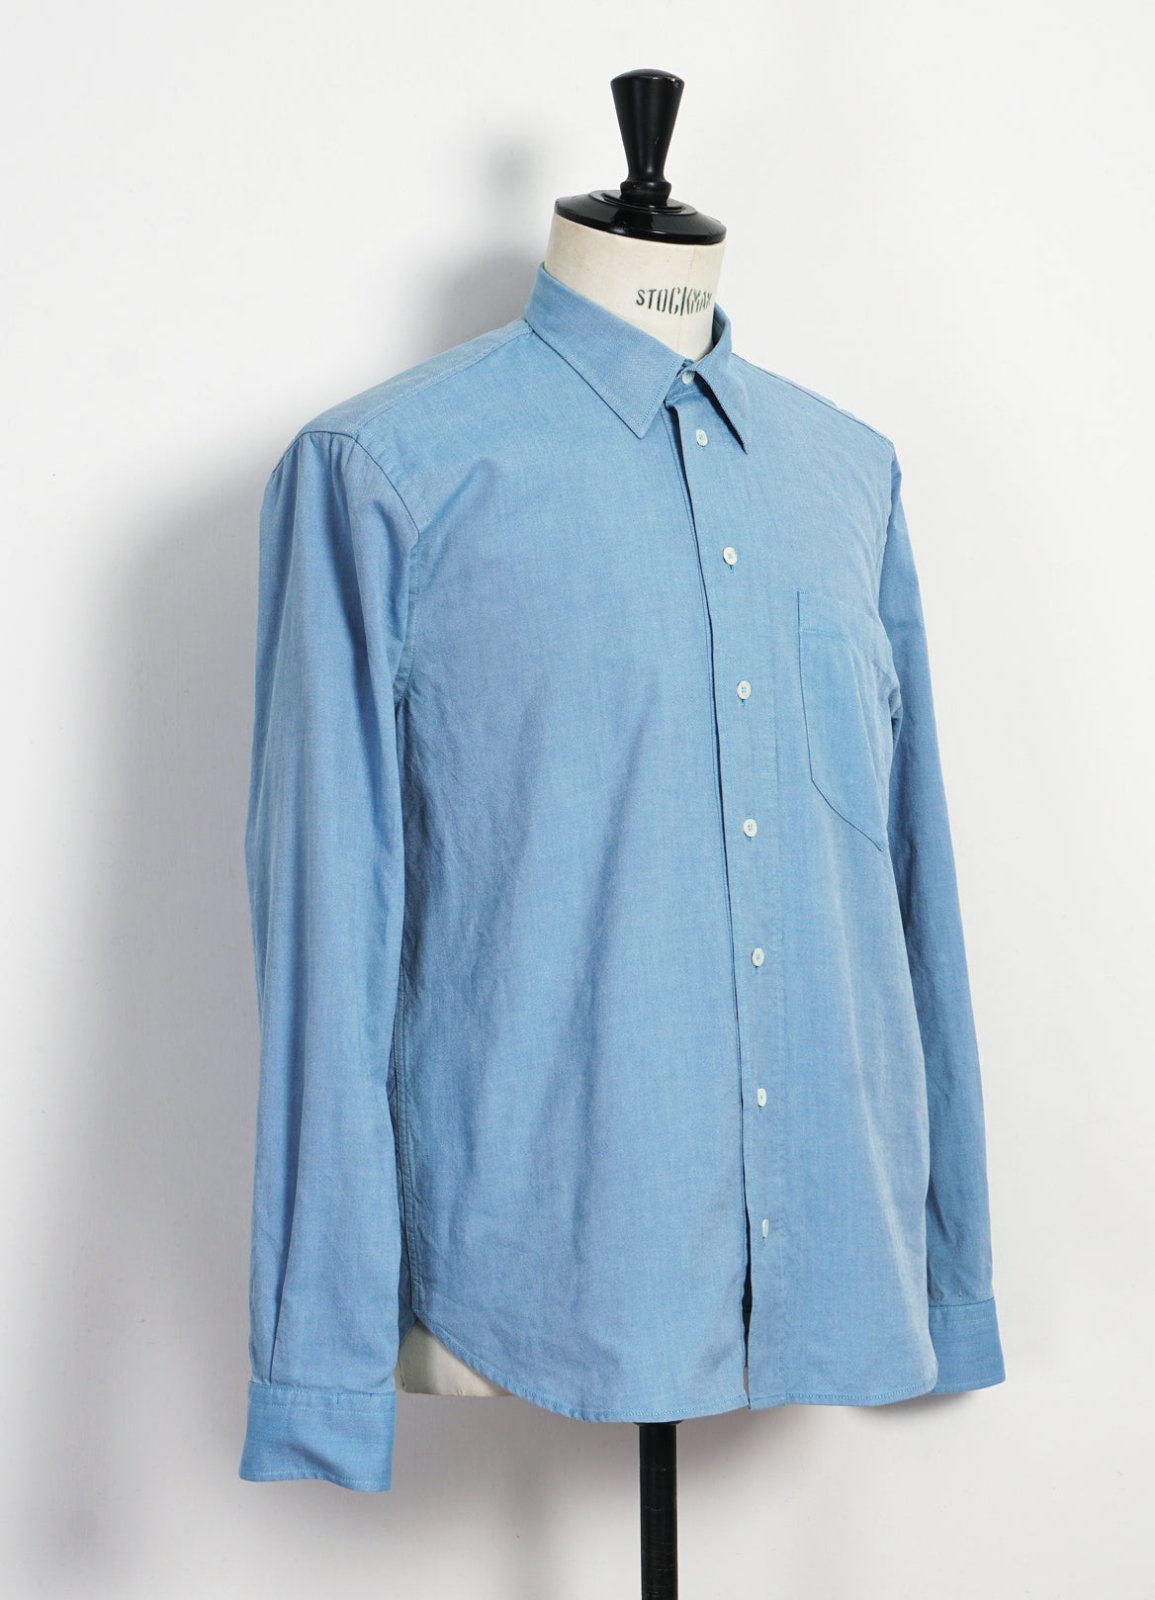 HANSEN GARMENTS - RAYMOND | Relaxed Classic Shirt | Turquoise - HANSEN Garments